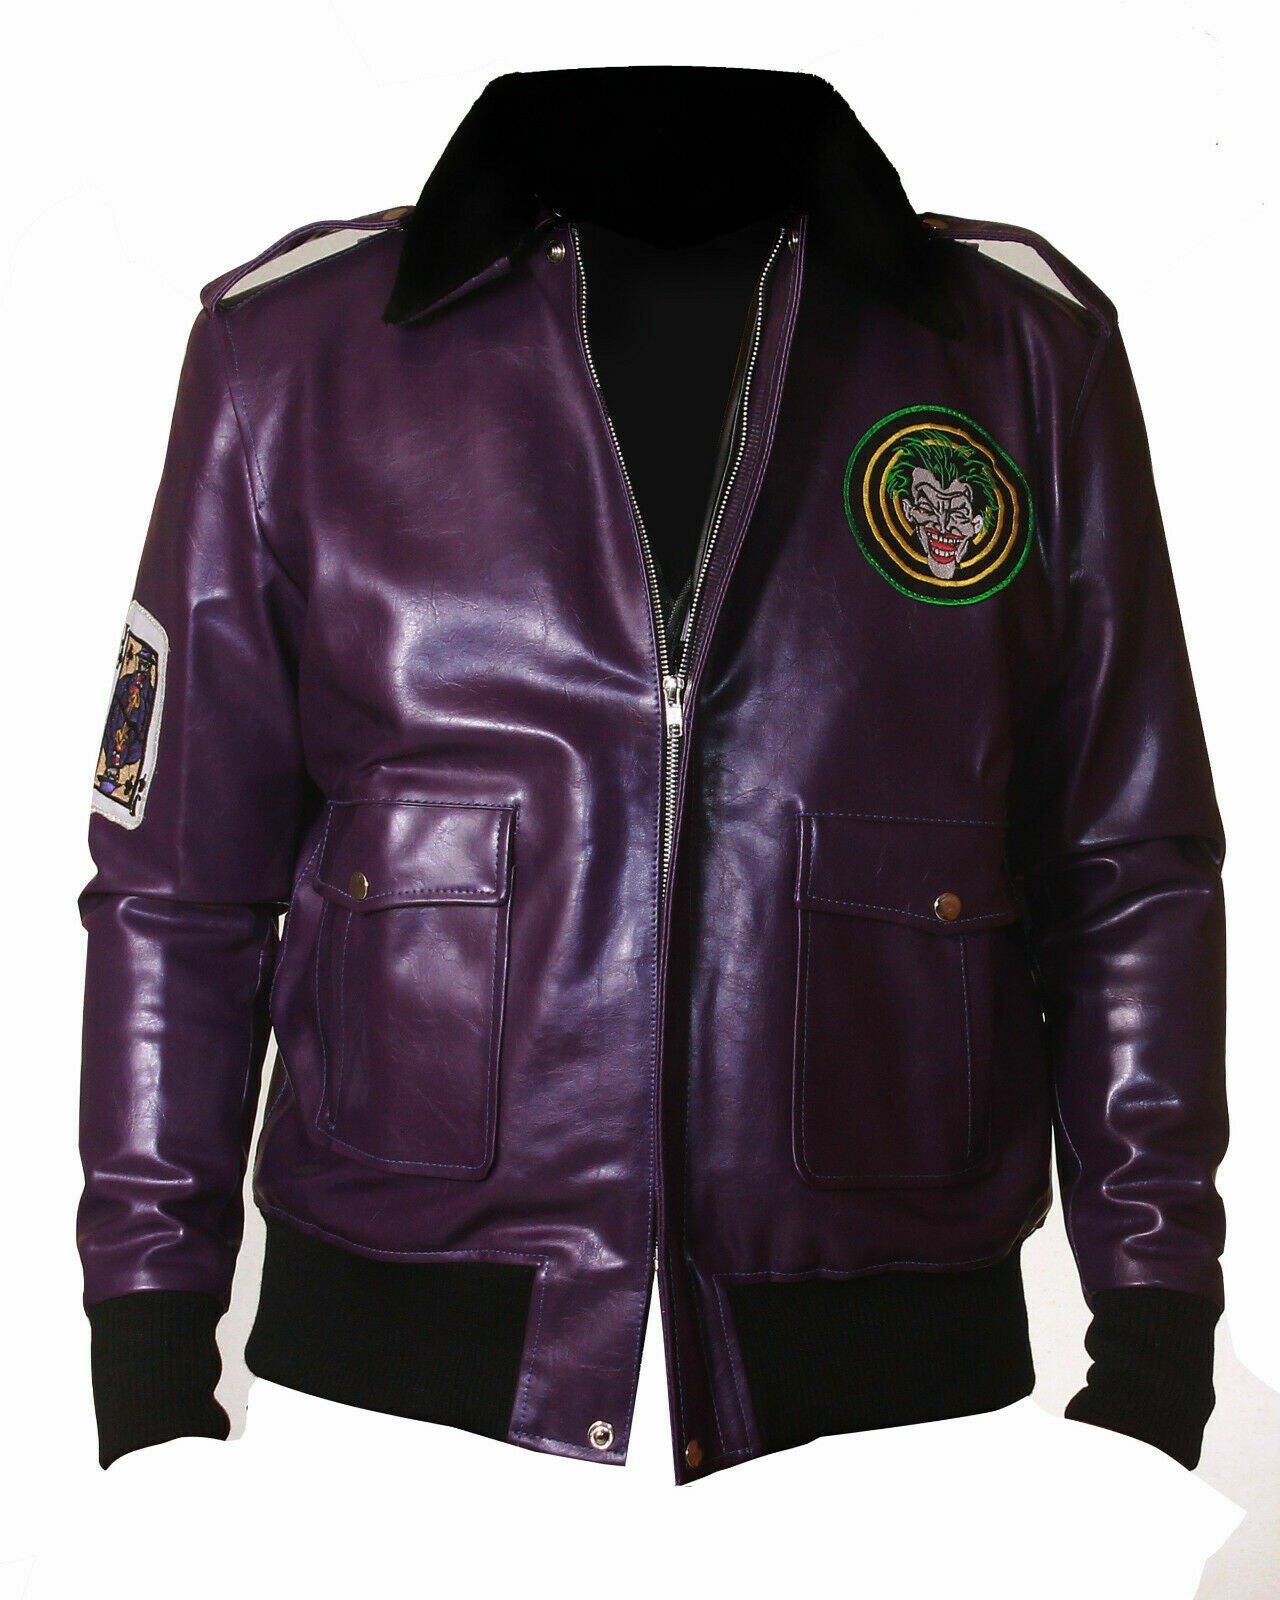 Henchmen Joker Goon Purple Bomber Leather Jacket with Fur Collar